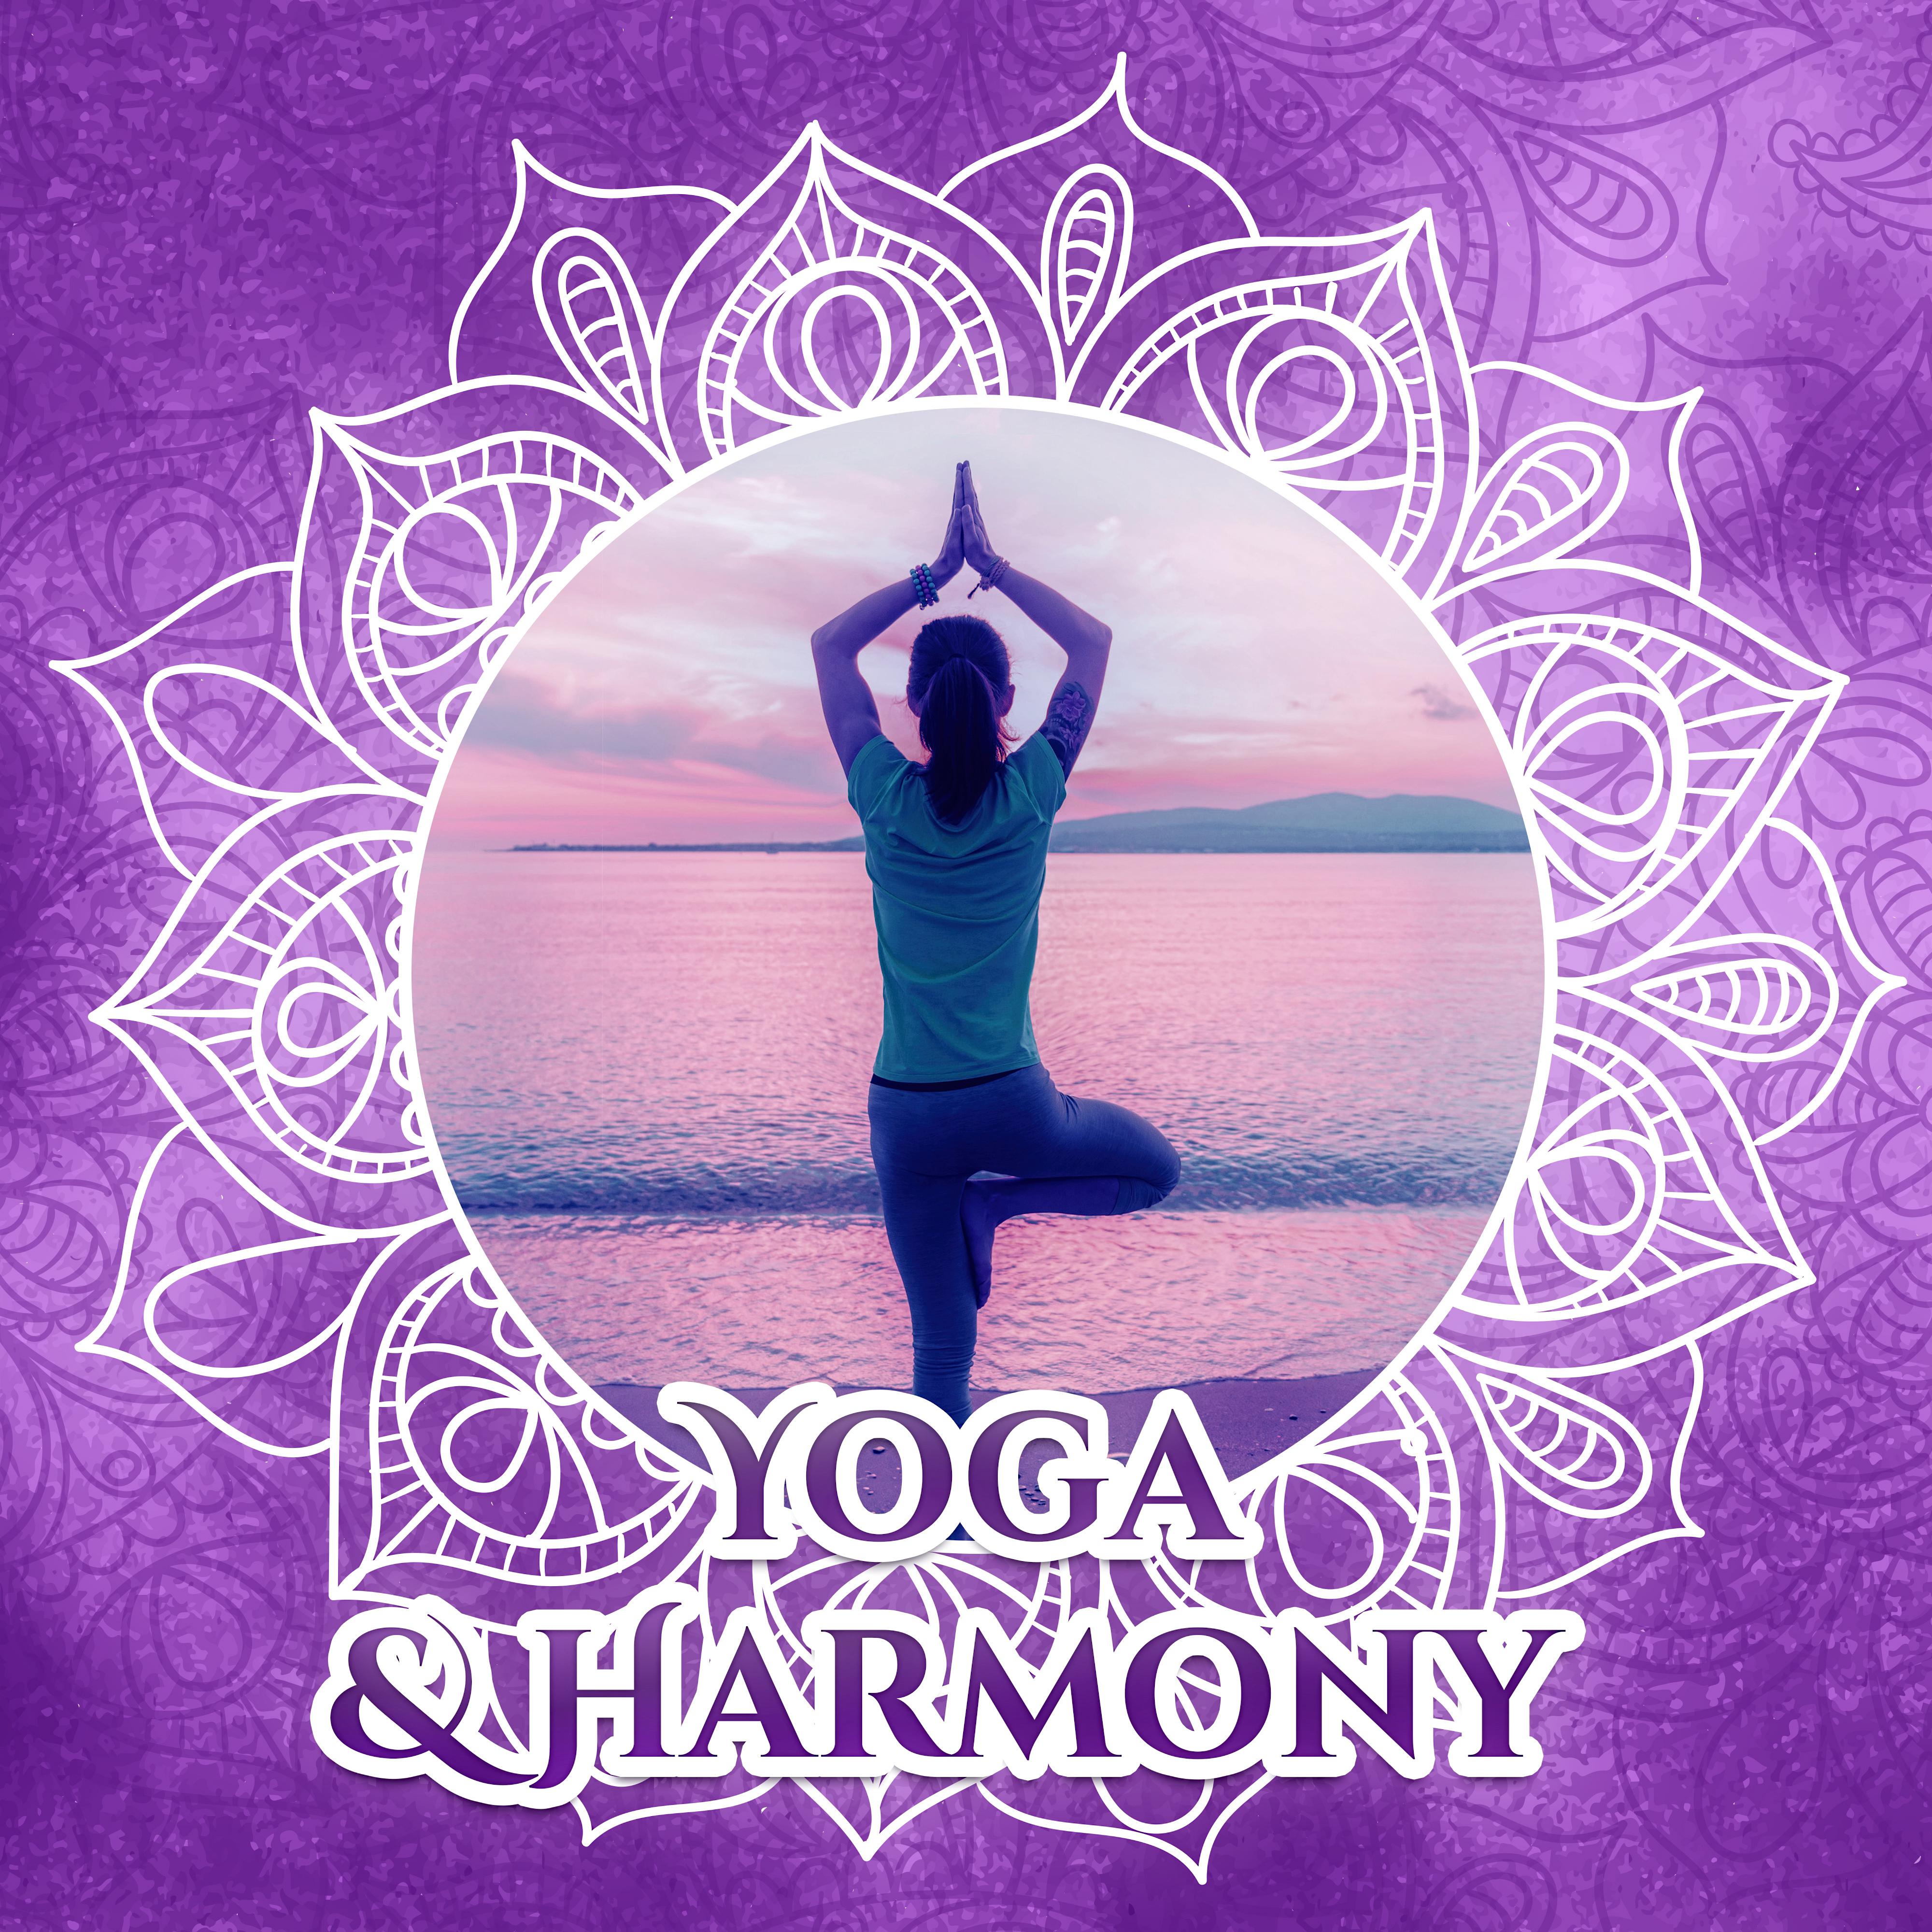 Yoga & Harmony – Meditation Music, Training Yoga, Water Sound Therapy, Focus, Tibetan Music, Deep Concentration